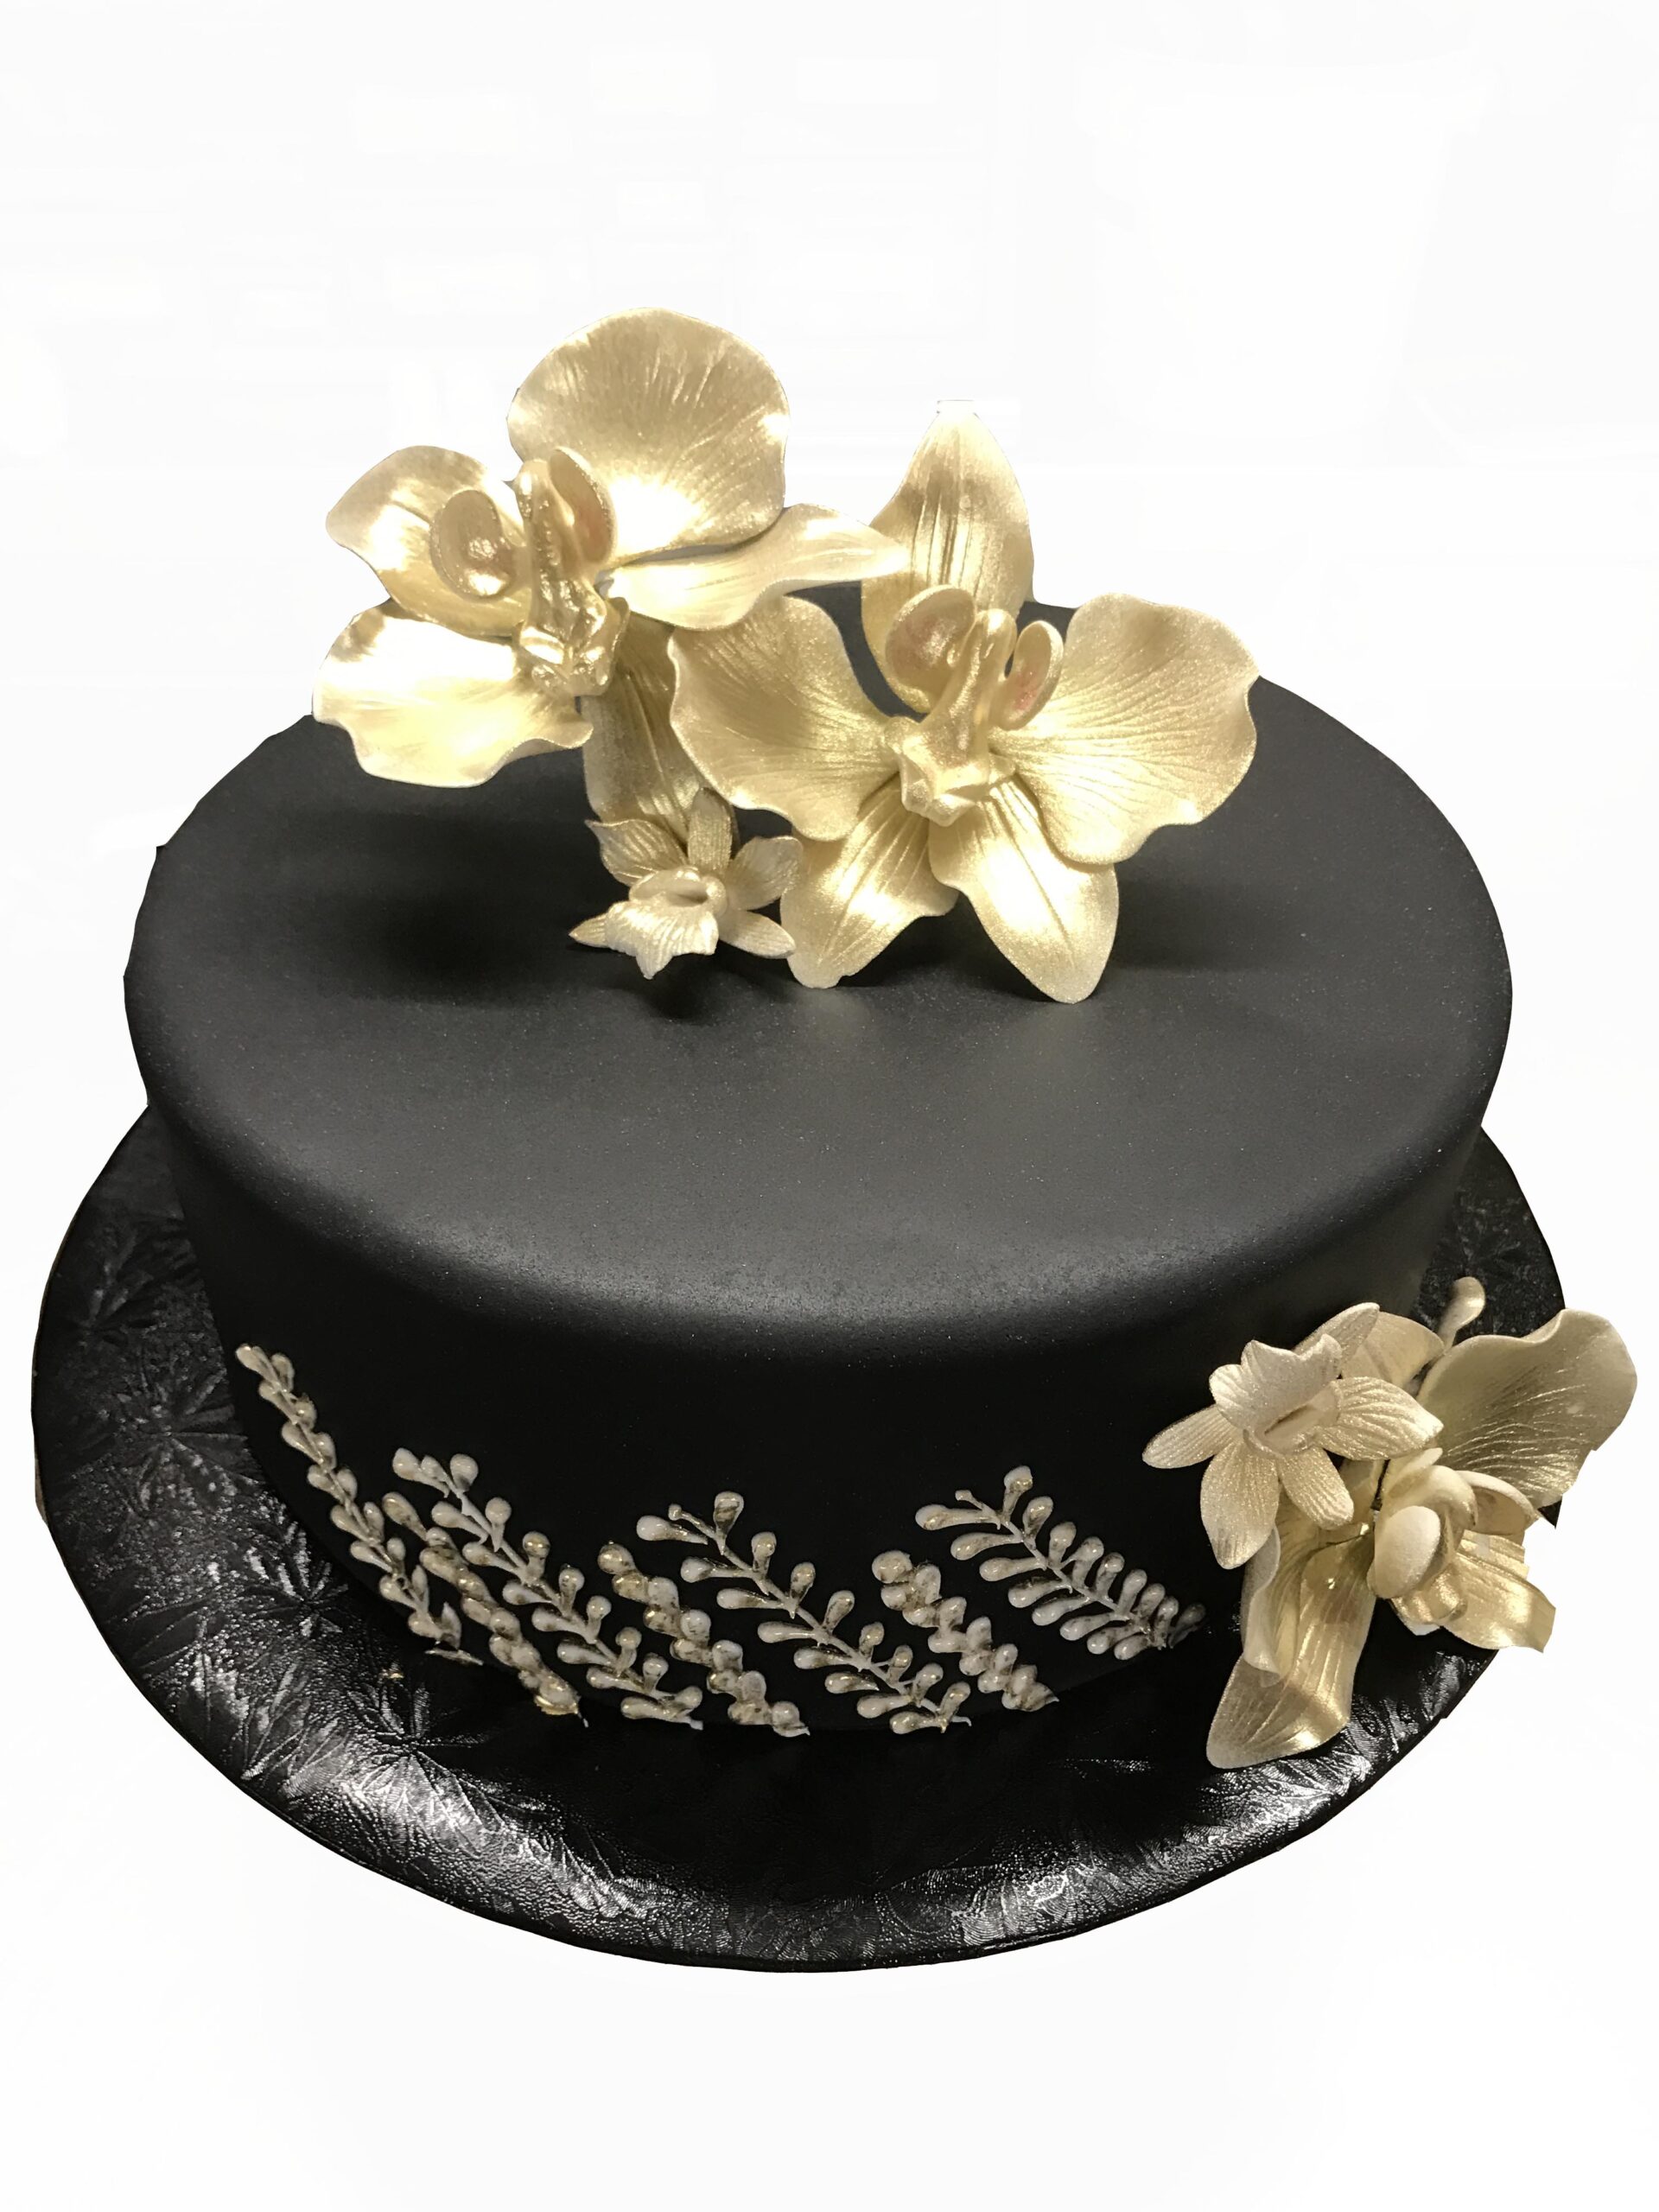 A4. Golden orchids on a black fondant cake